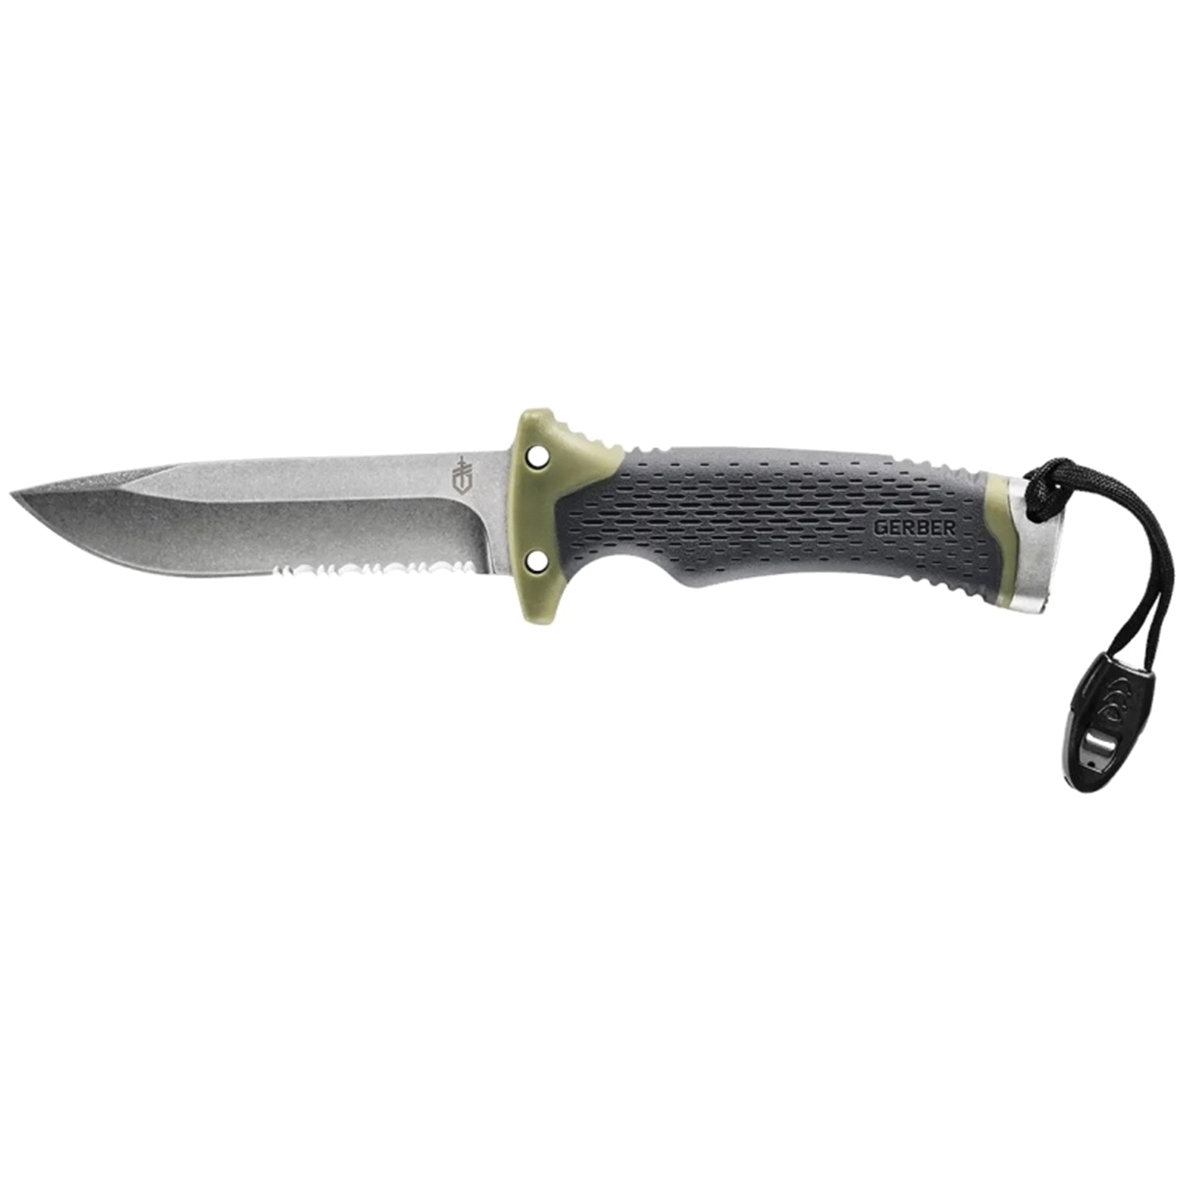 31-003941 Ultimate Survival Knife, 4-3/4 in L Blade, Steel Blade, Ergonomic, Textured Handle, Green Handle